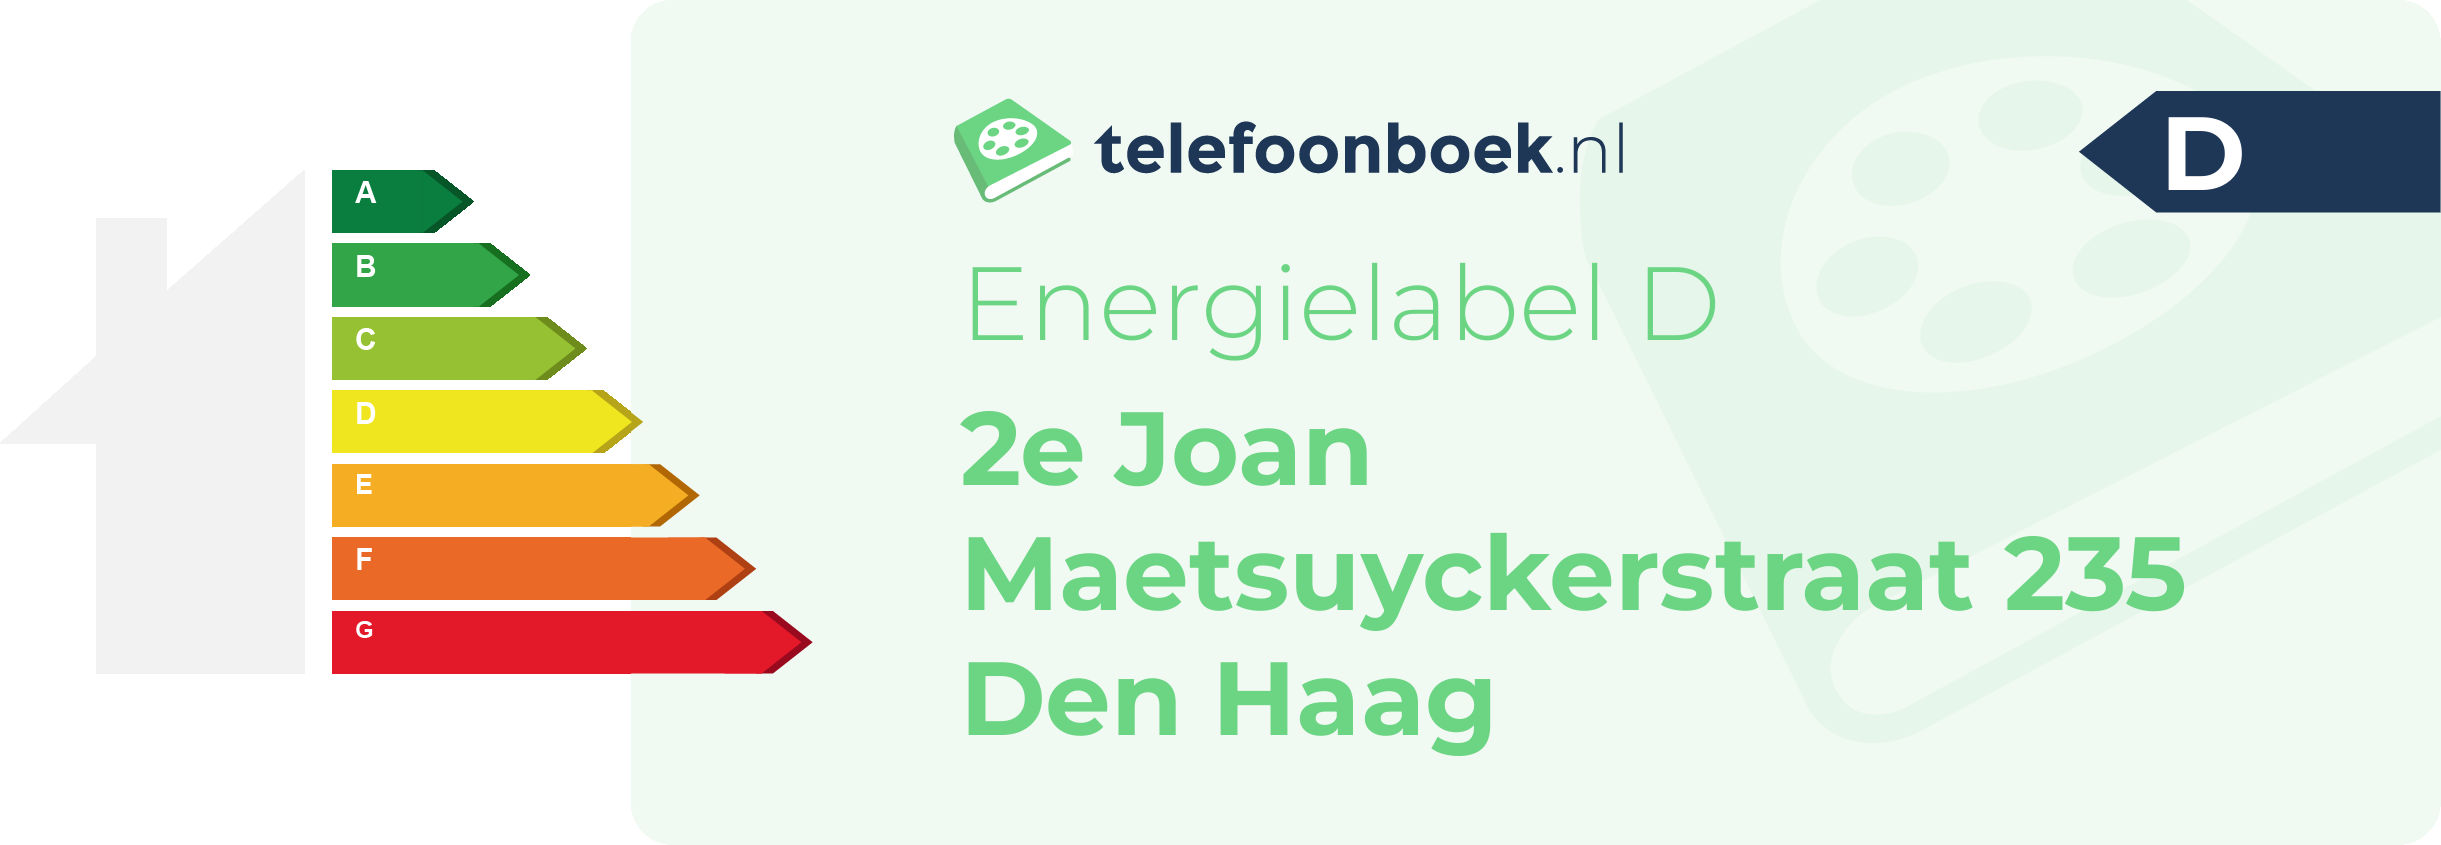 Energielabel 2e Joan Maetsuyckerstraat 235 Den Haag